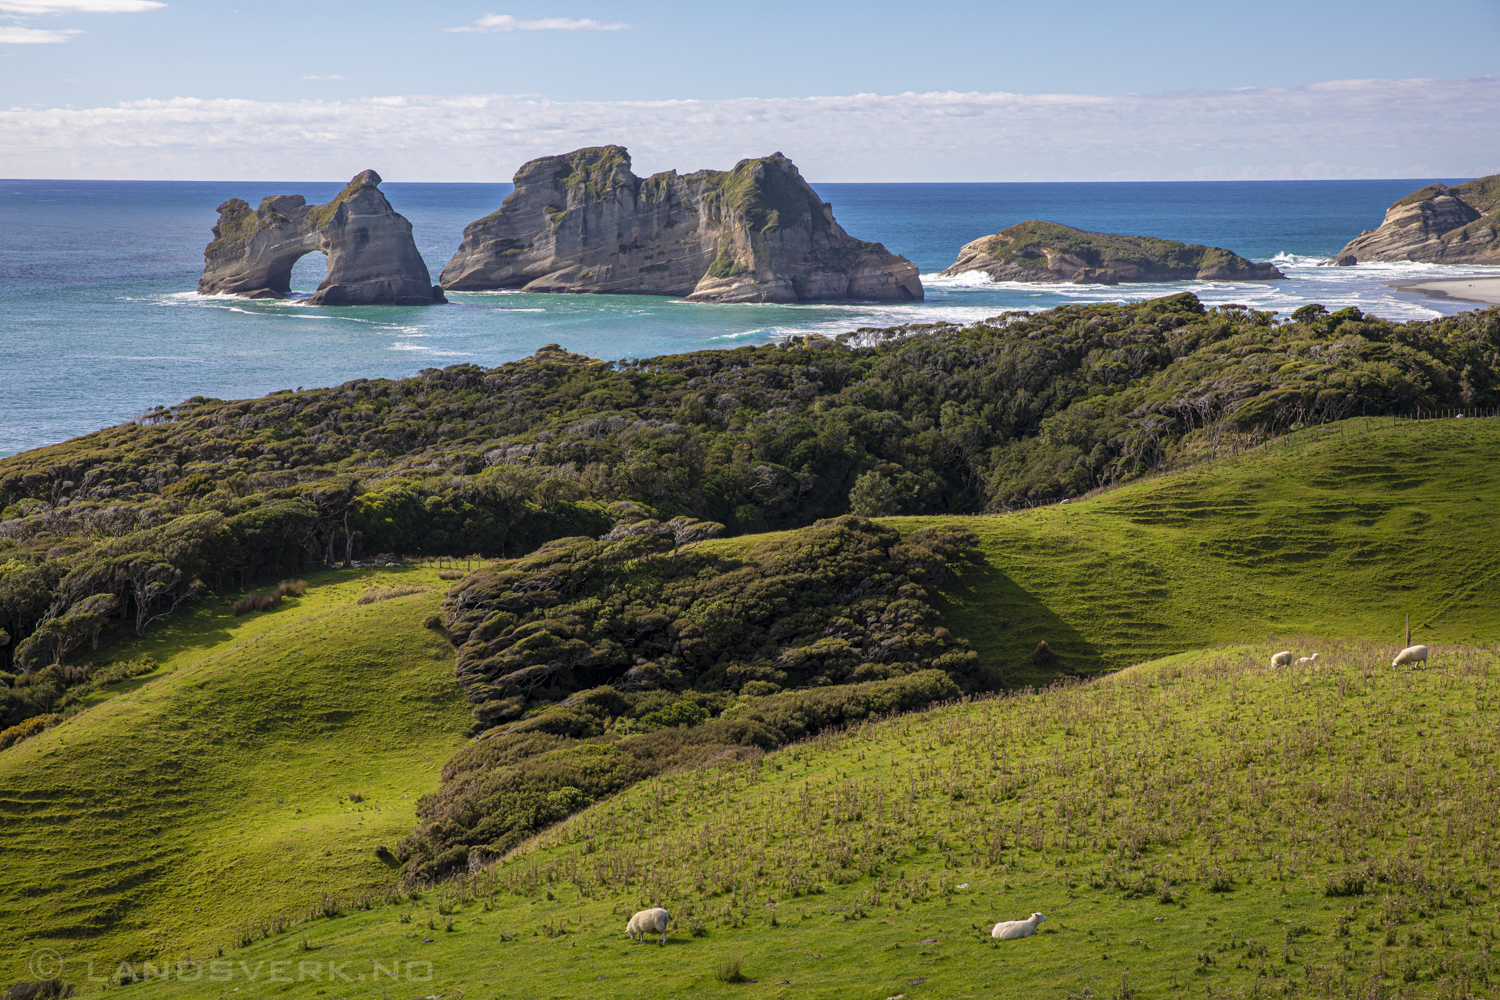 Wharakiri Beach, Takaka, New Zealand.

(Canon EOS 5D Mark IV / Canon EF 24-70mm f/2.8 L II USM)